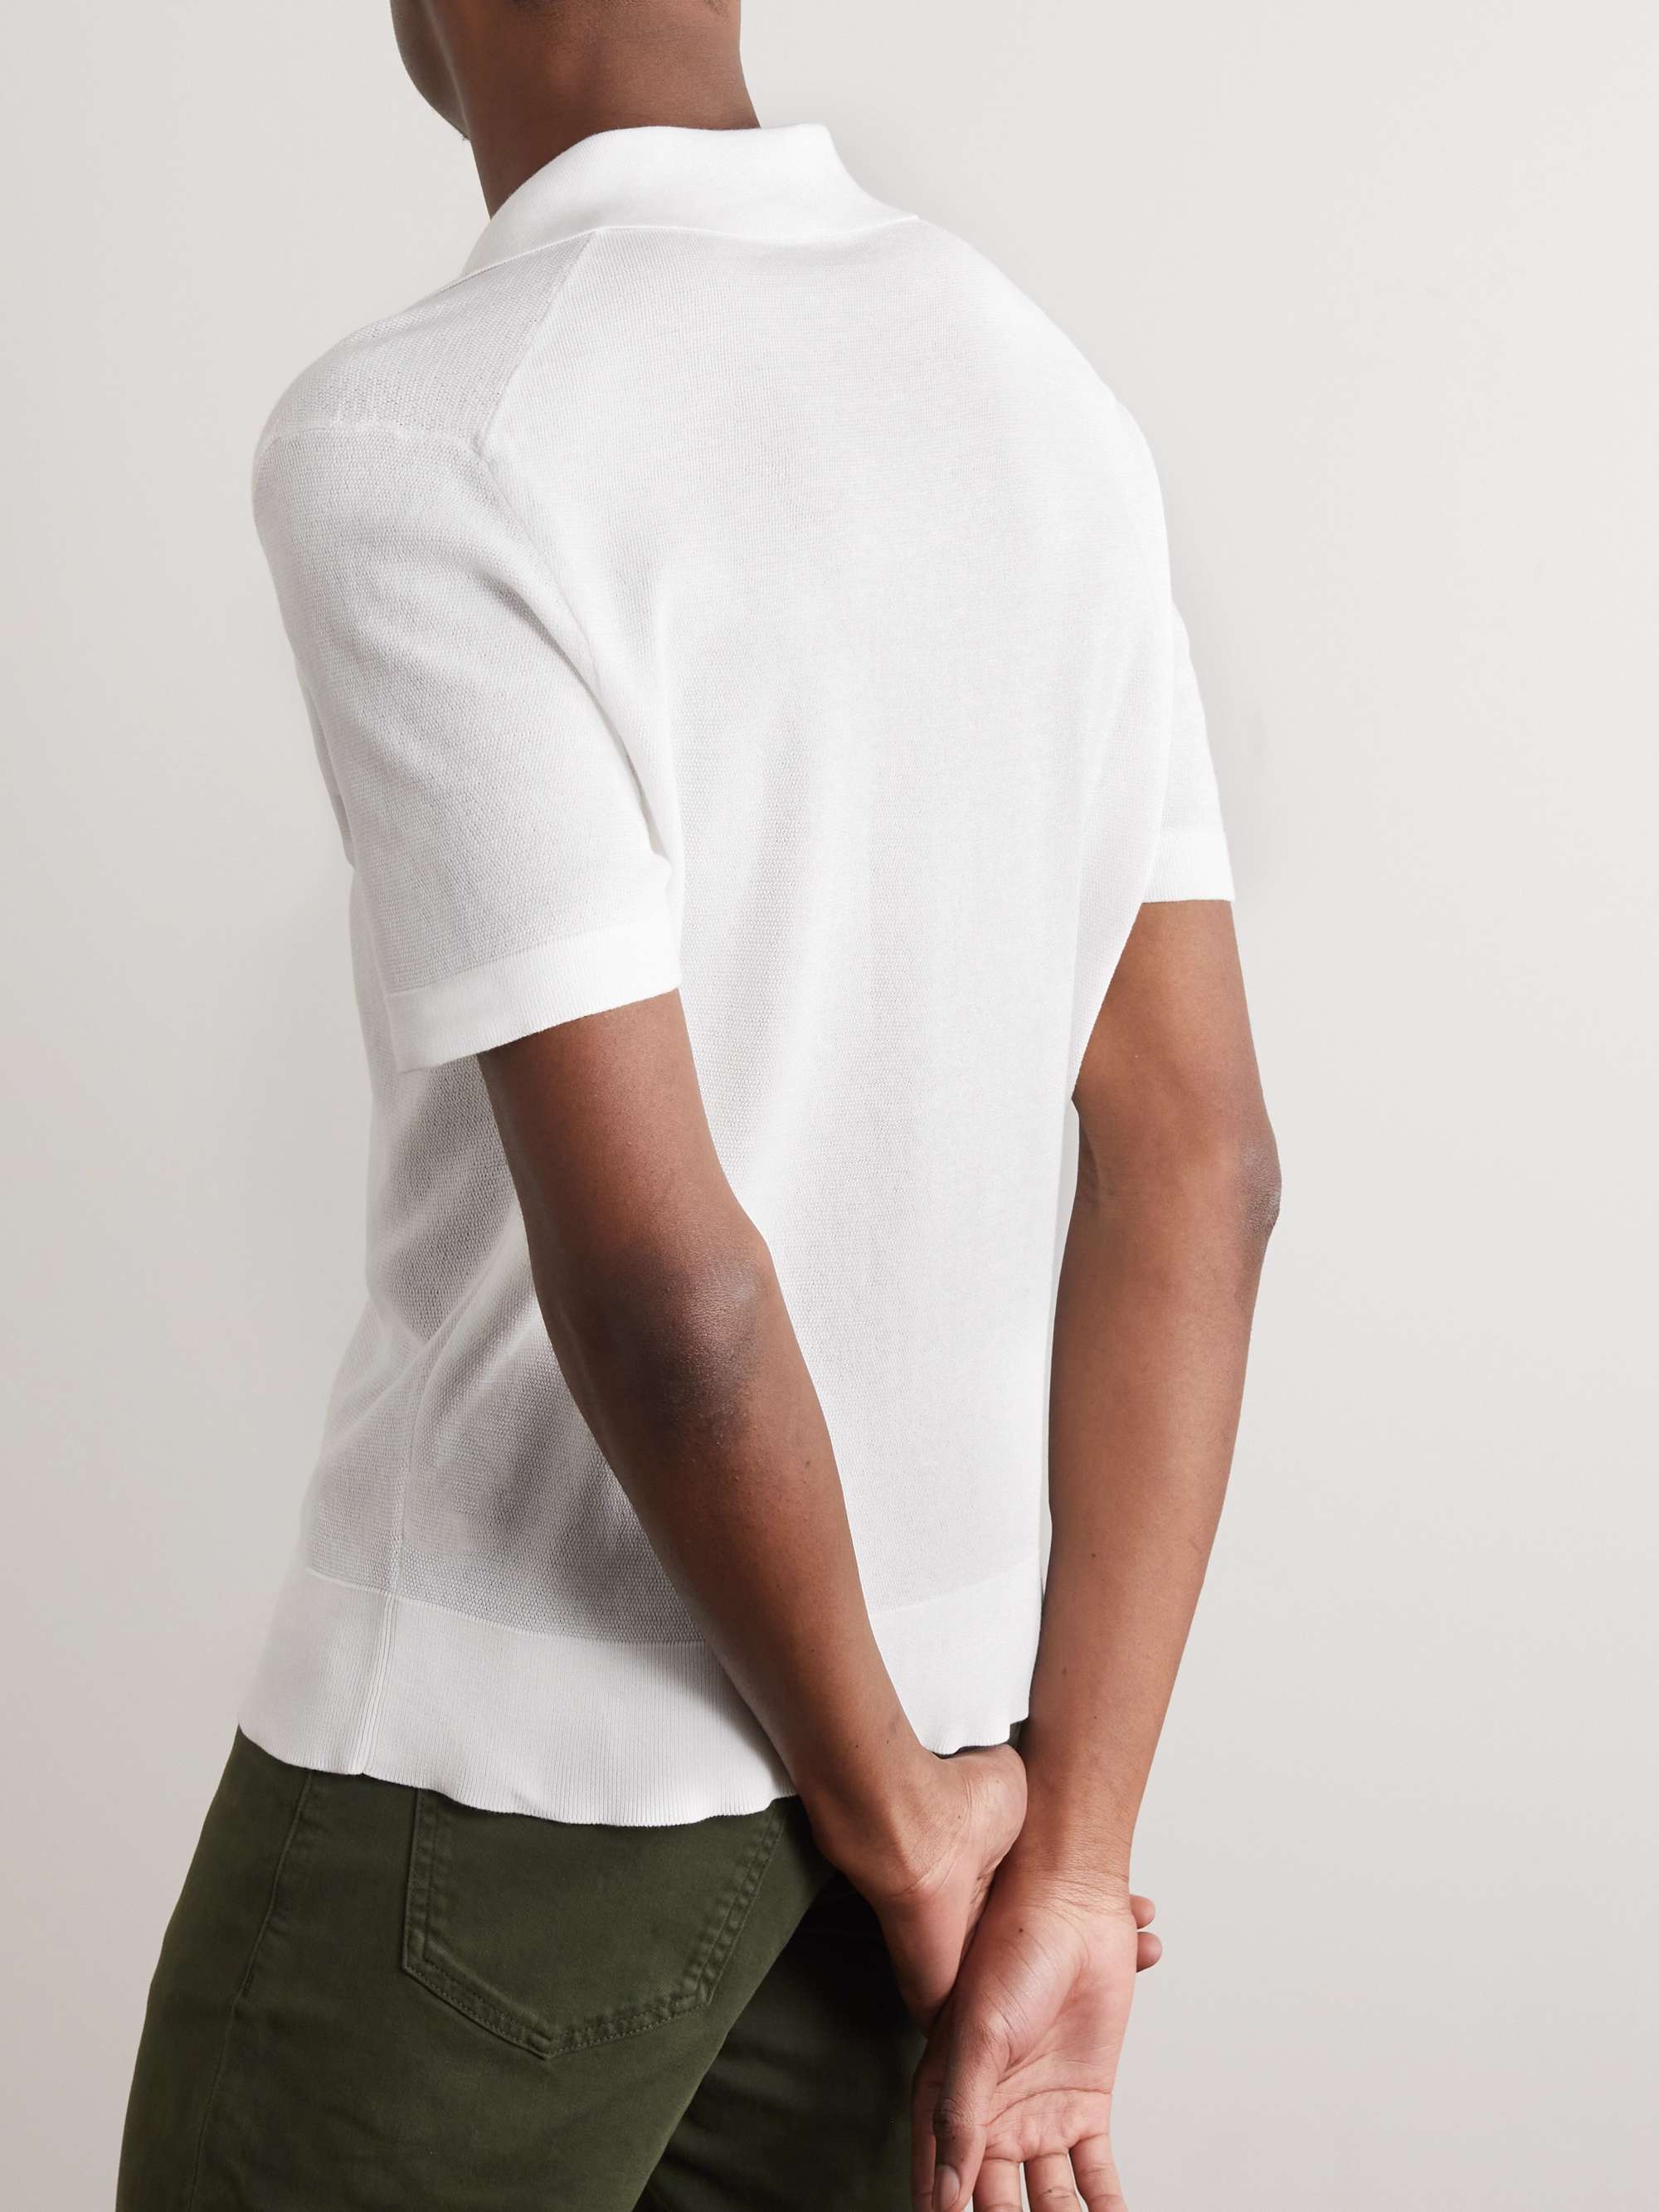 PURDEY Slim-Fit Cotton Polo Shirt